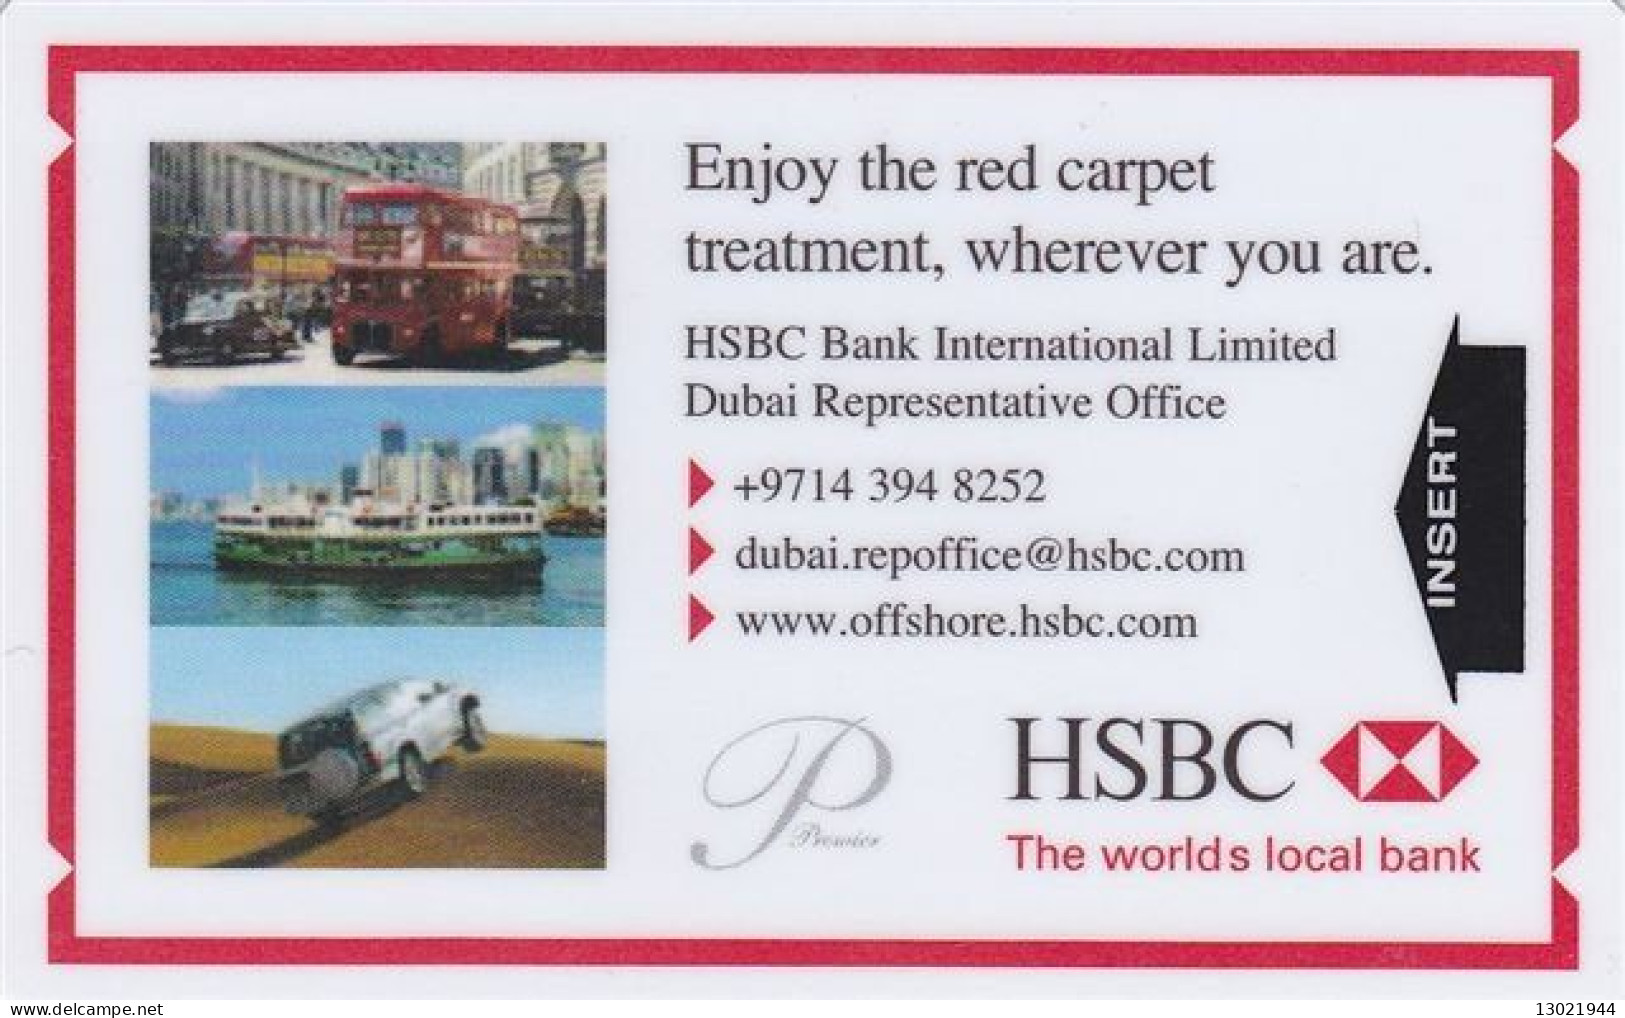 QATAR   KEY HOTEL   Mövenpick Hotel Doha - HSBC - Hotelsleutels (kaarten)